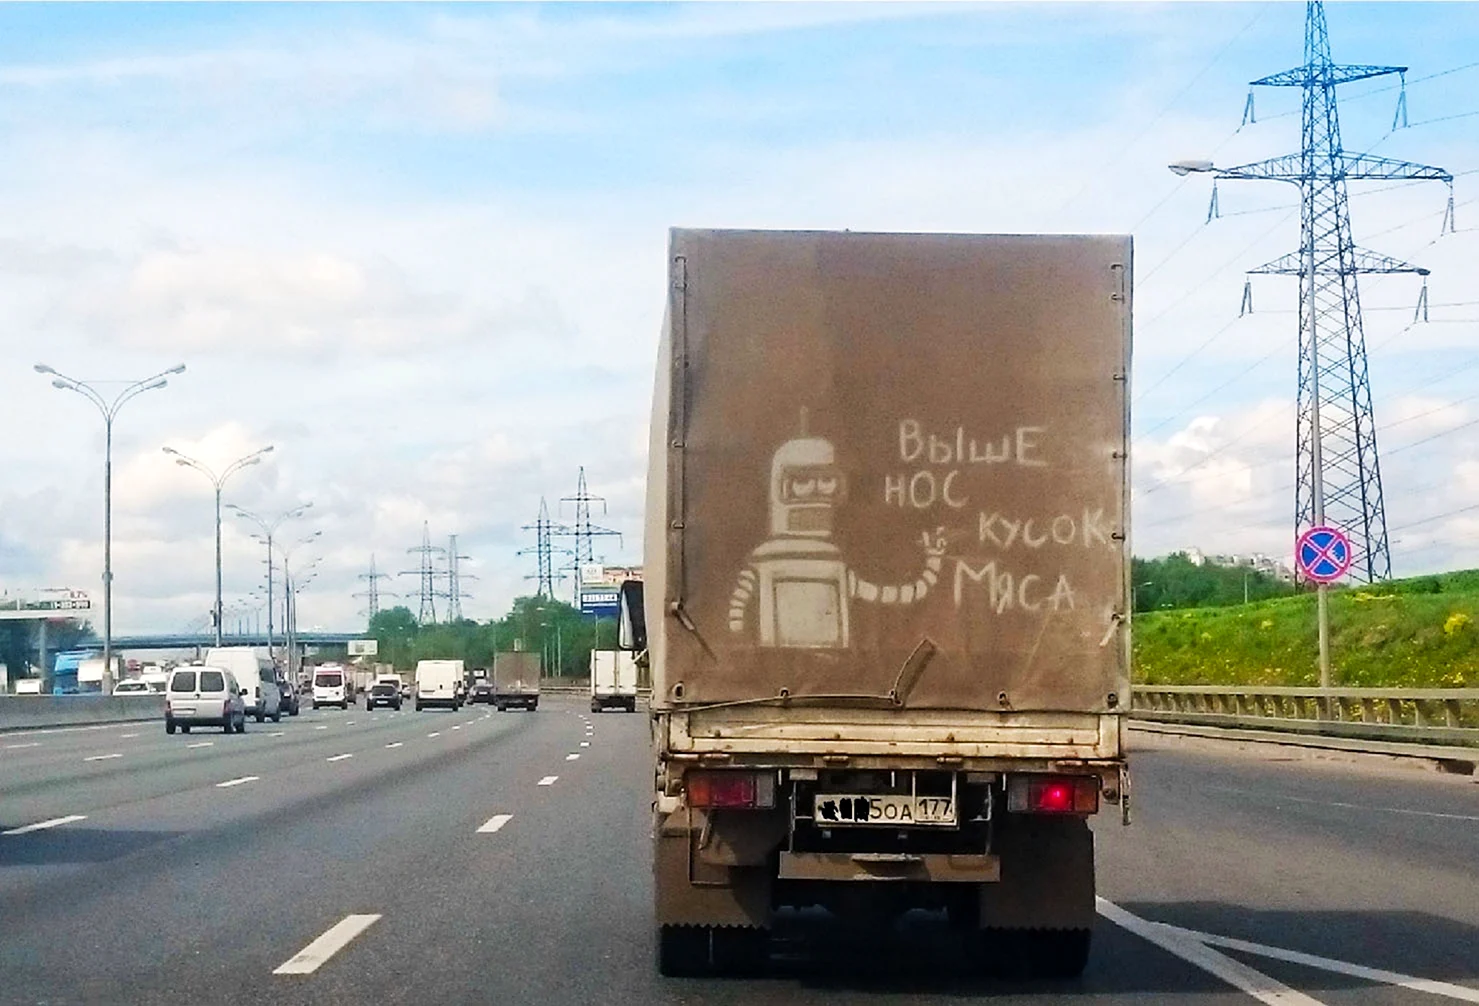 Надписи на грузовиках